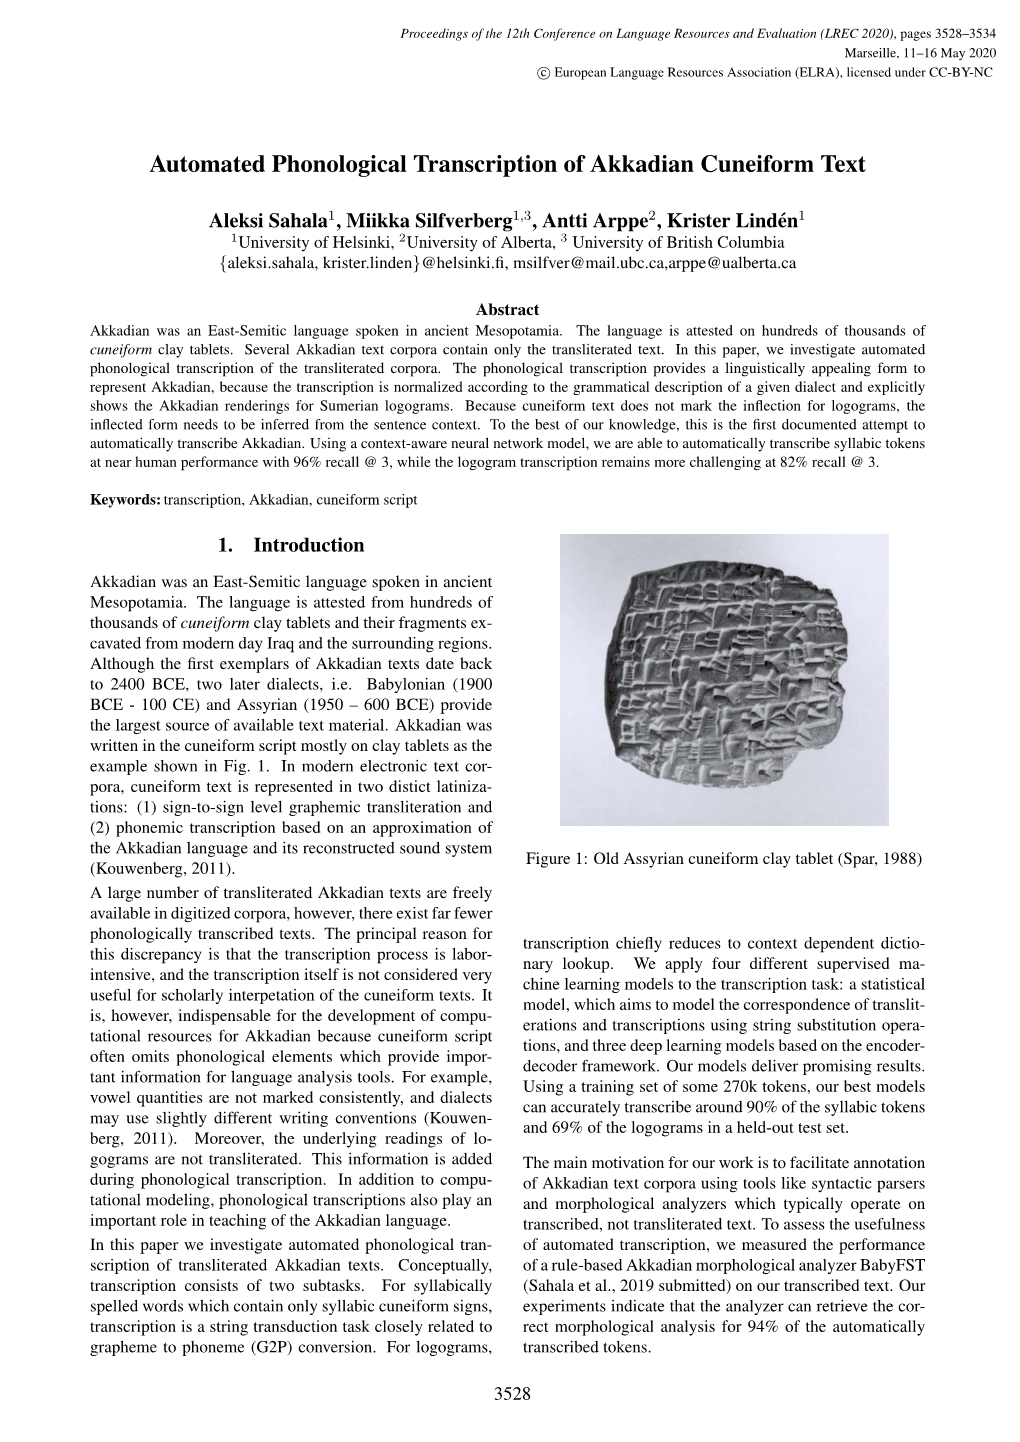 Automated Phonological Transcription of Akkadian Cuneiform Text